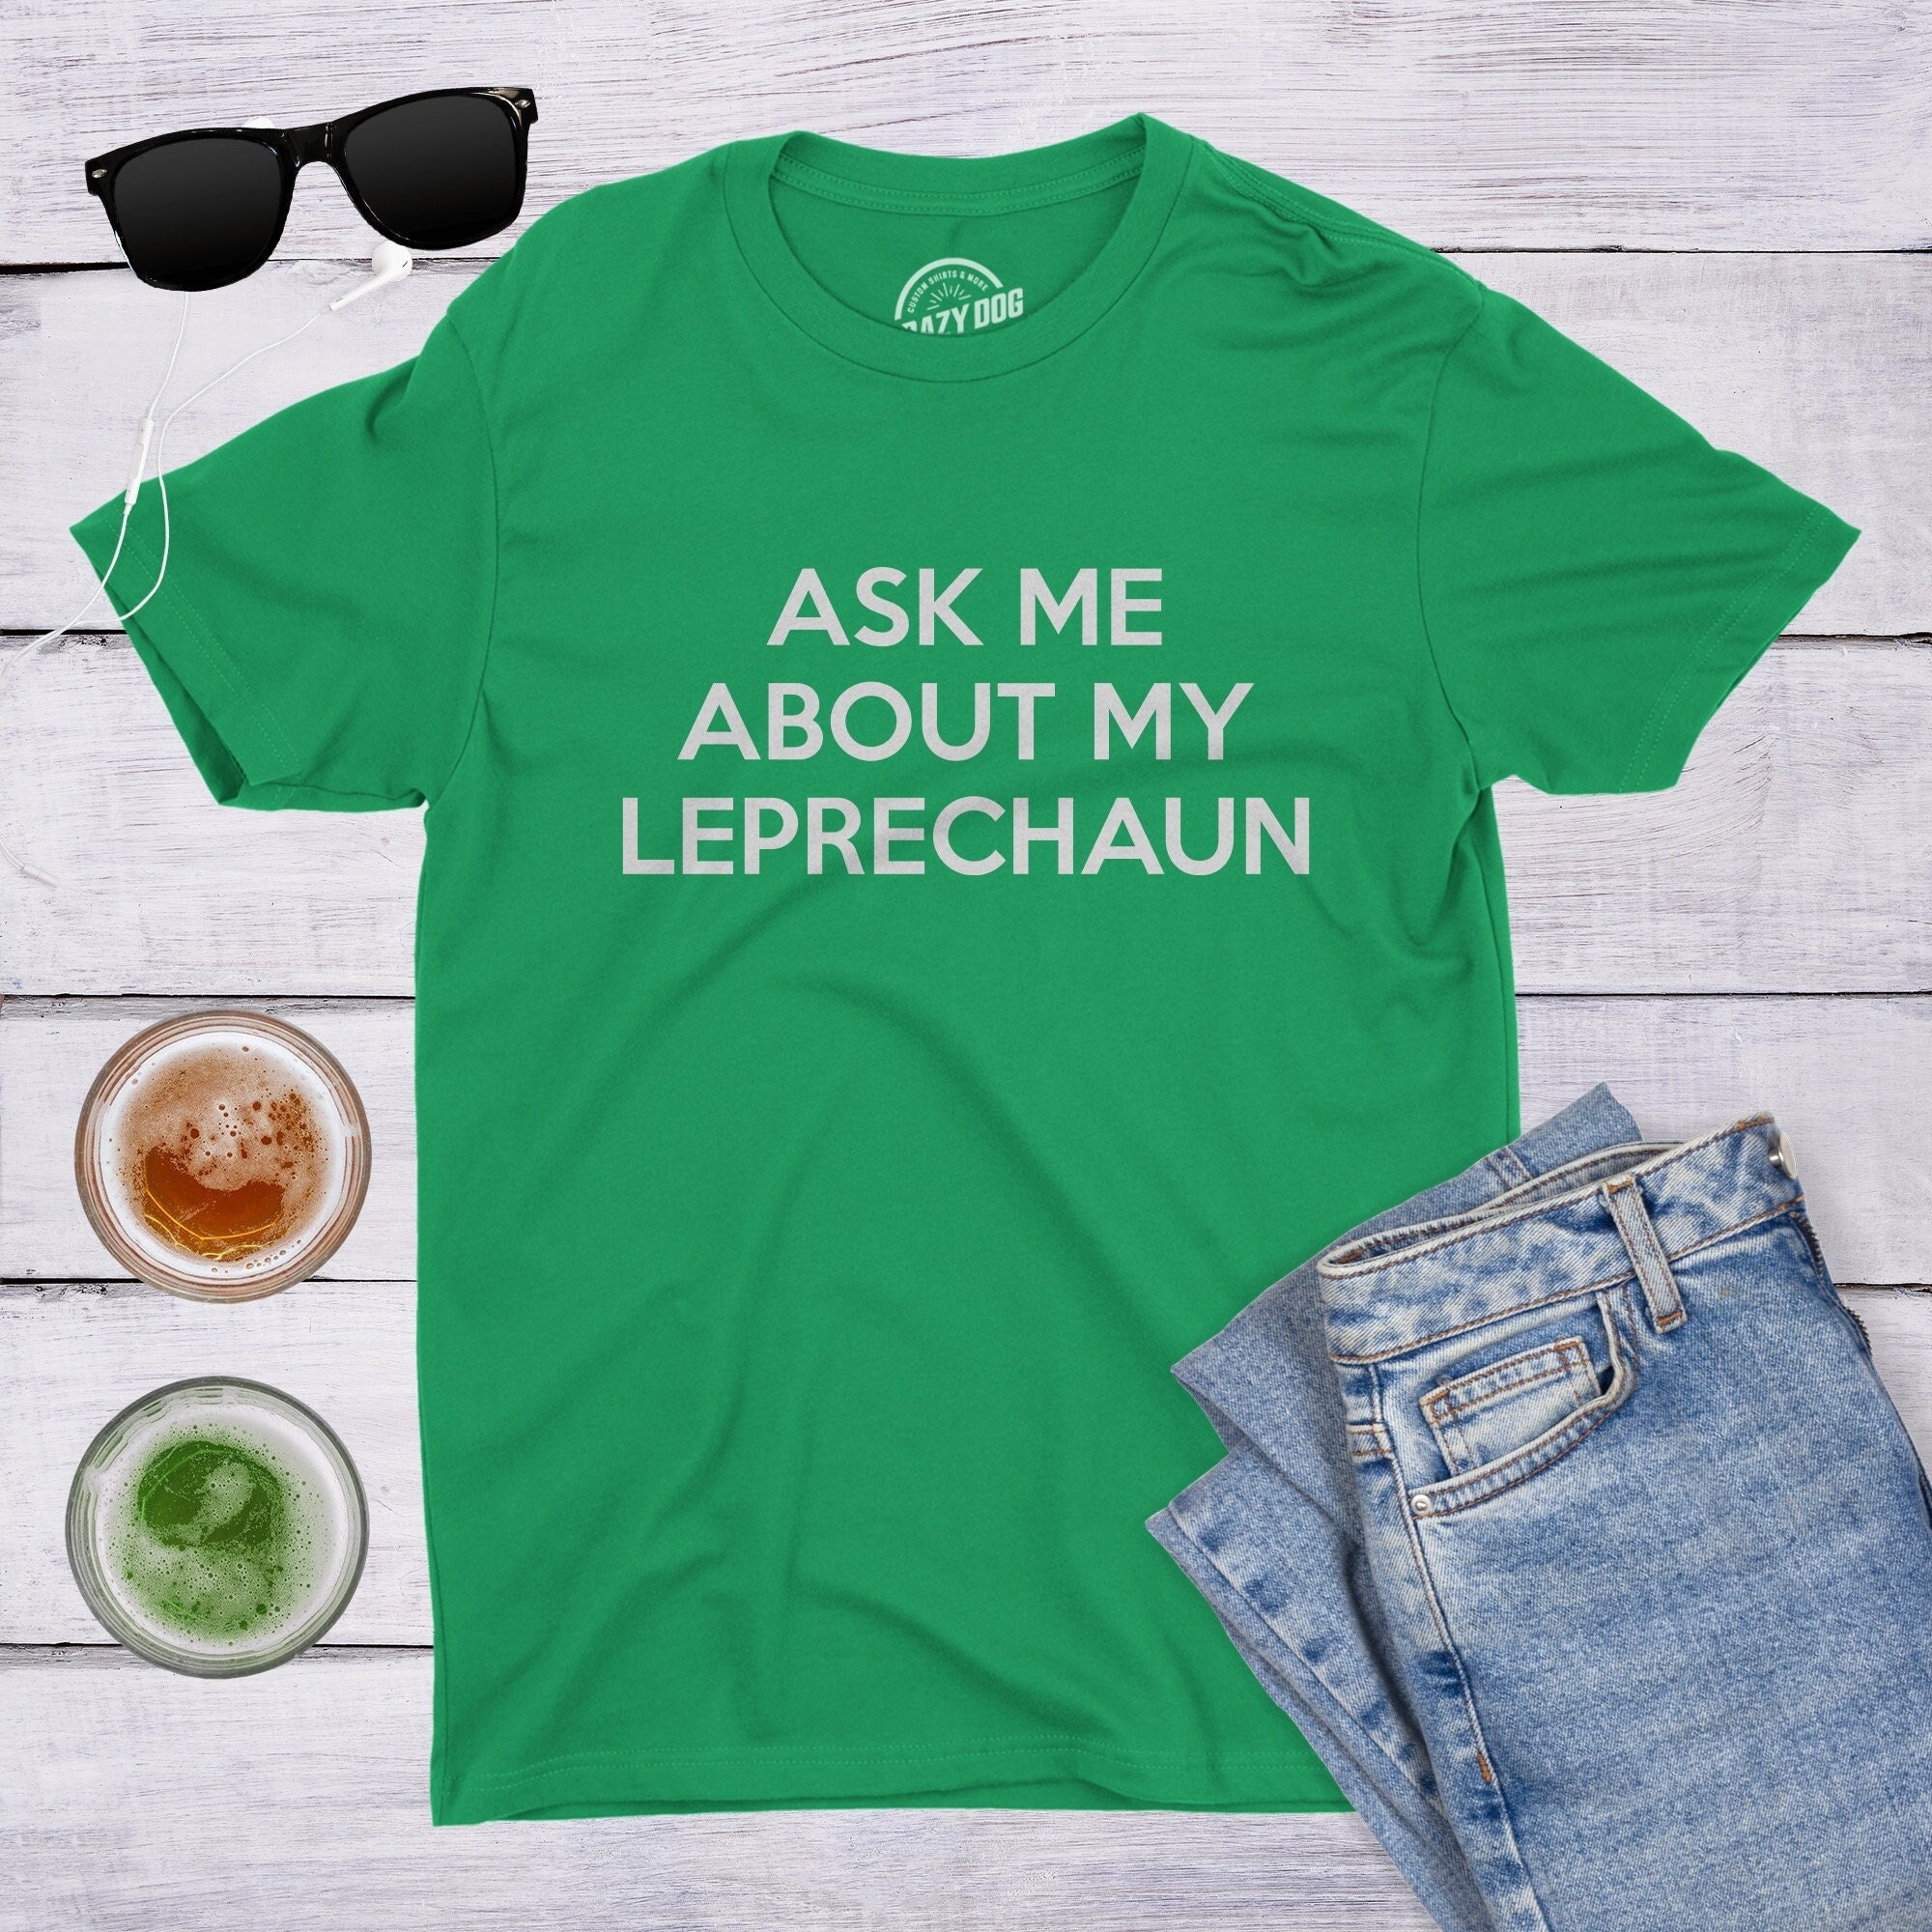 leprechaun amateur sketch shirt